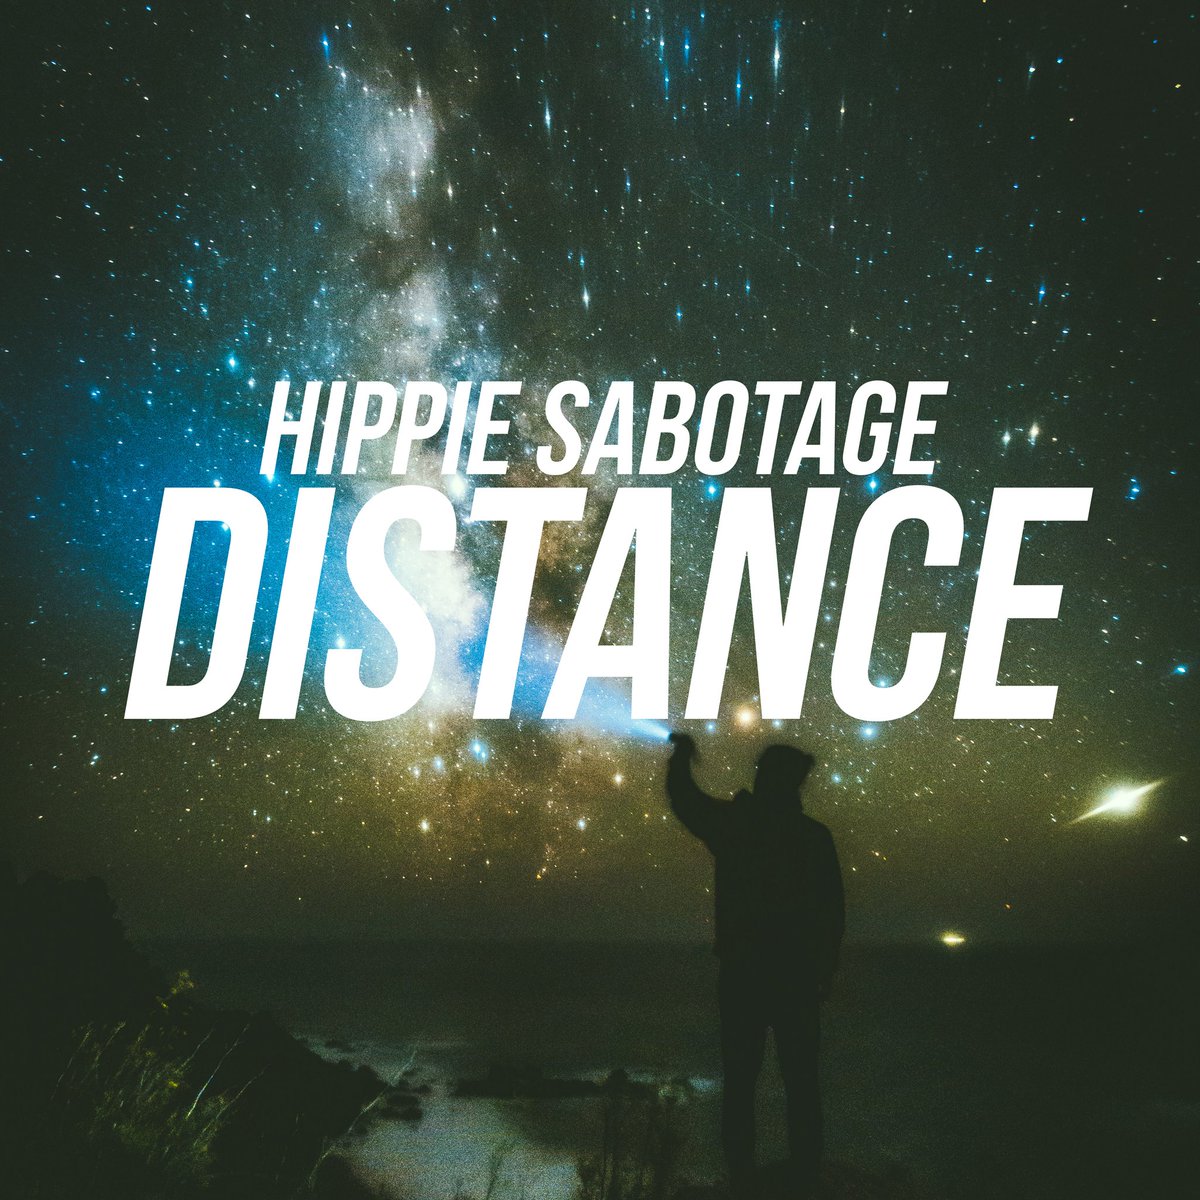 Hippie Sabotage - TRUST NOBODY Chords - Chordify.